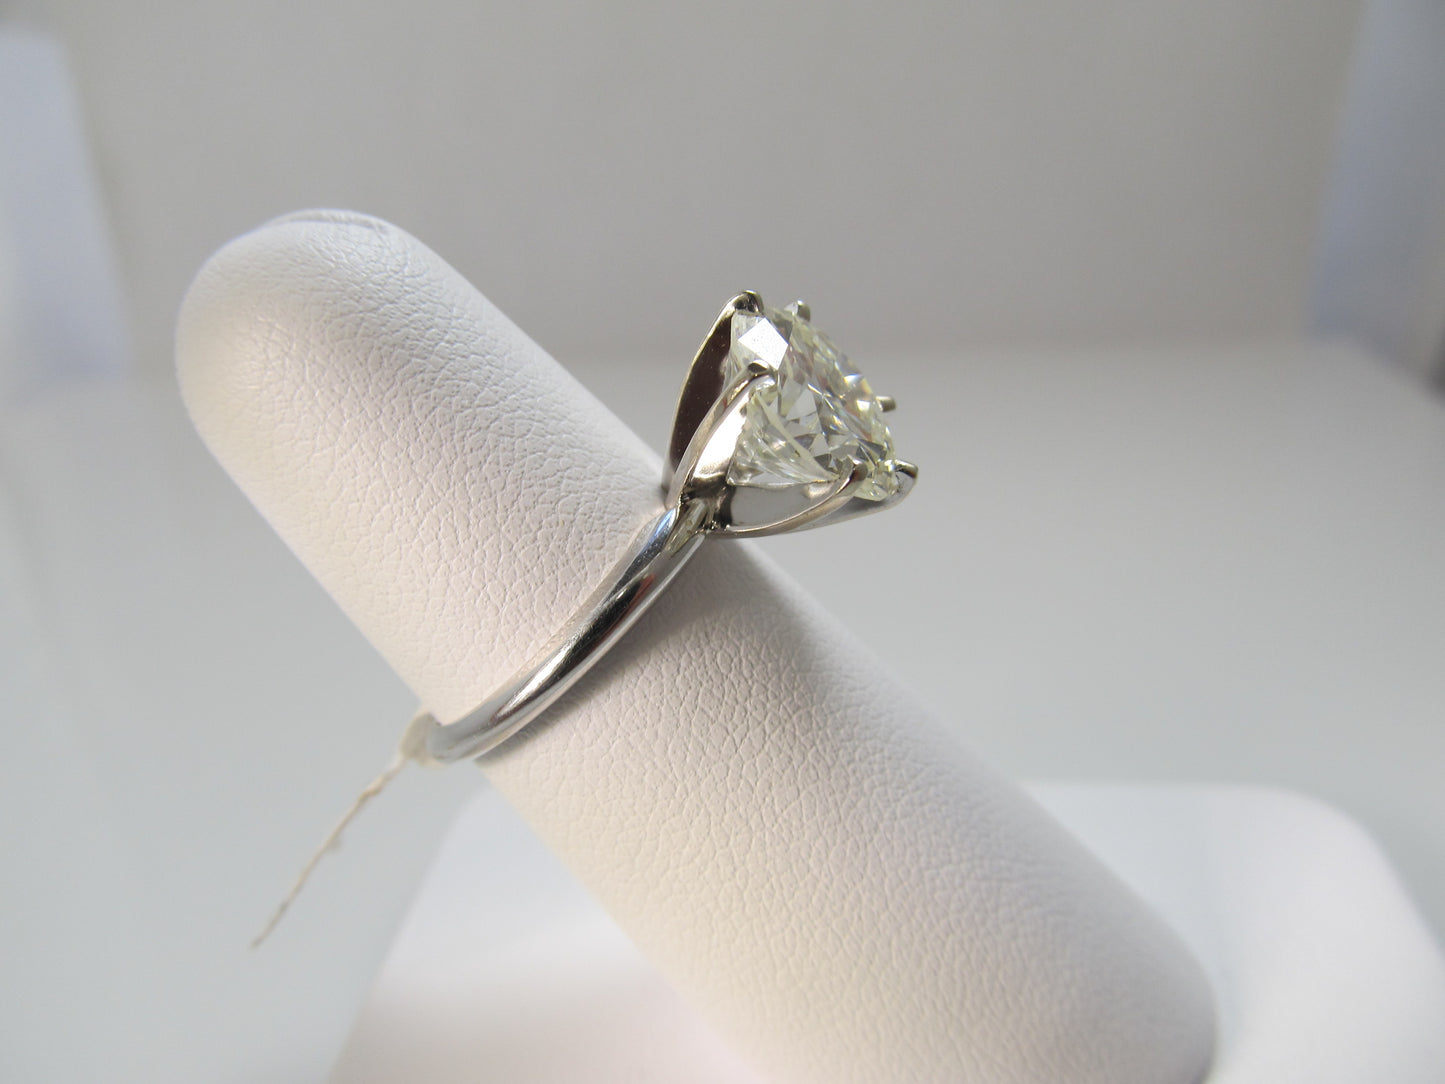 Fantastic 4.18ct diamond solitaire ring